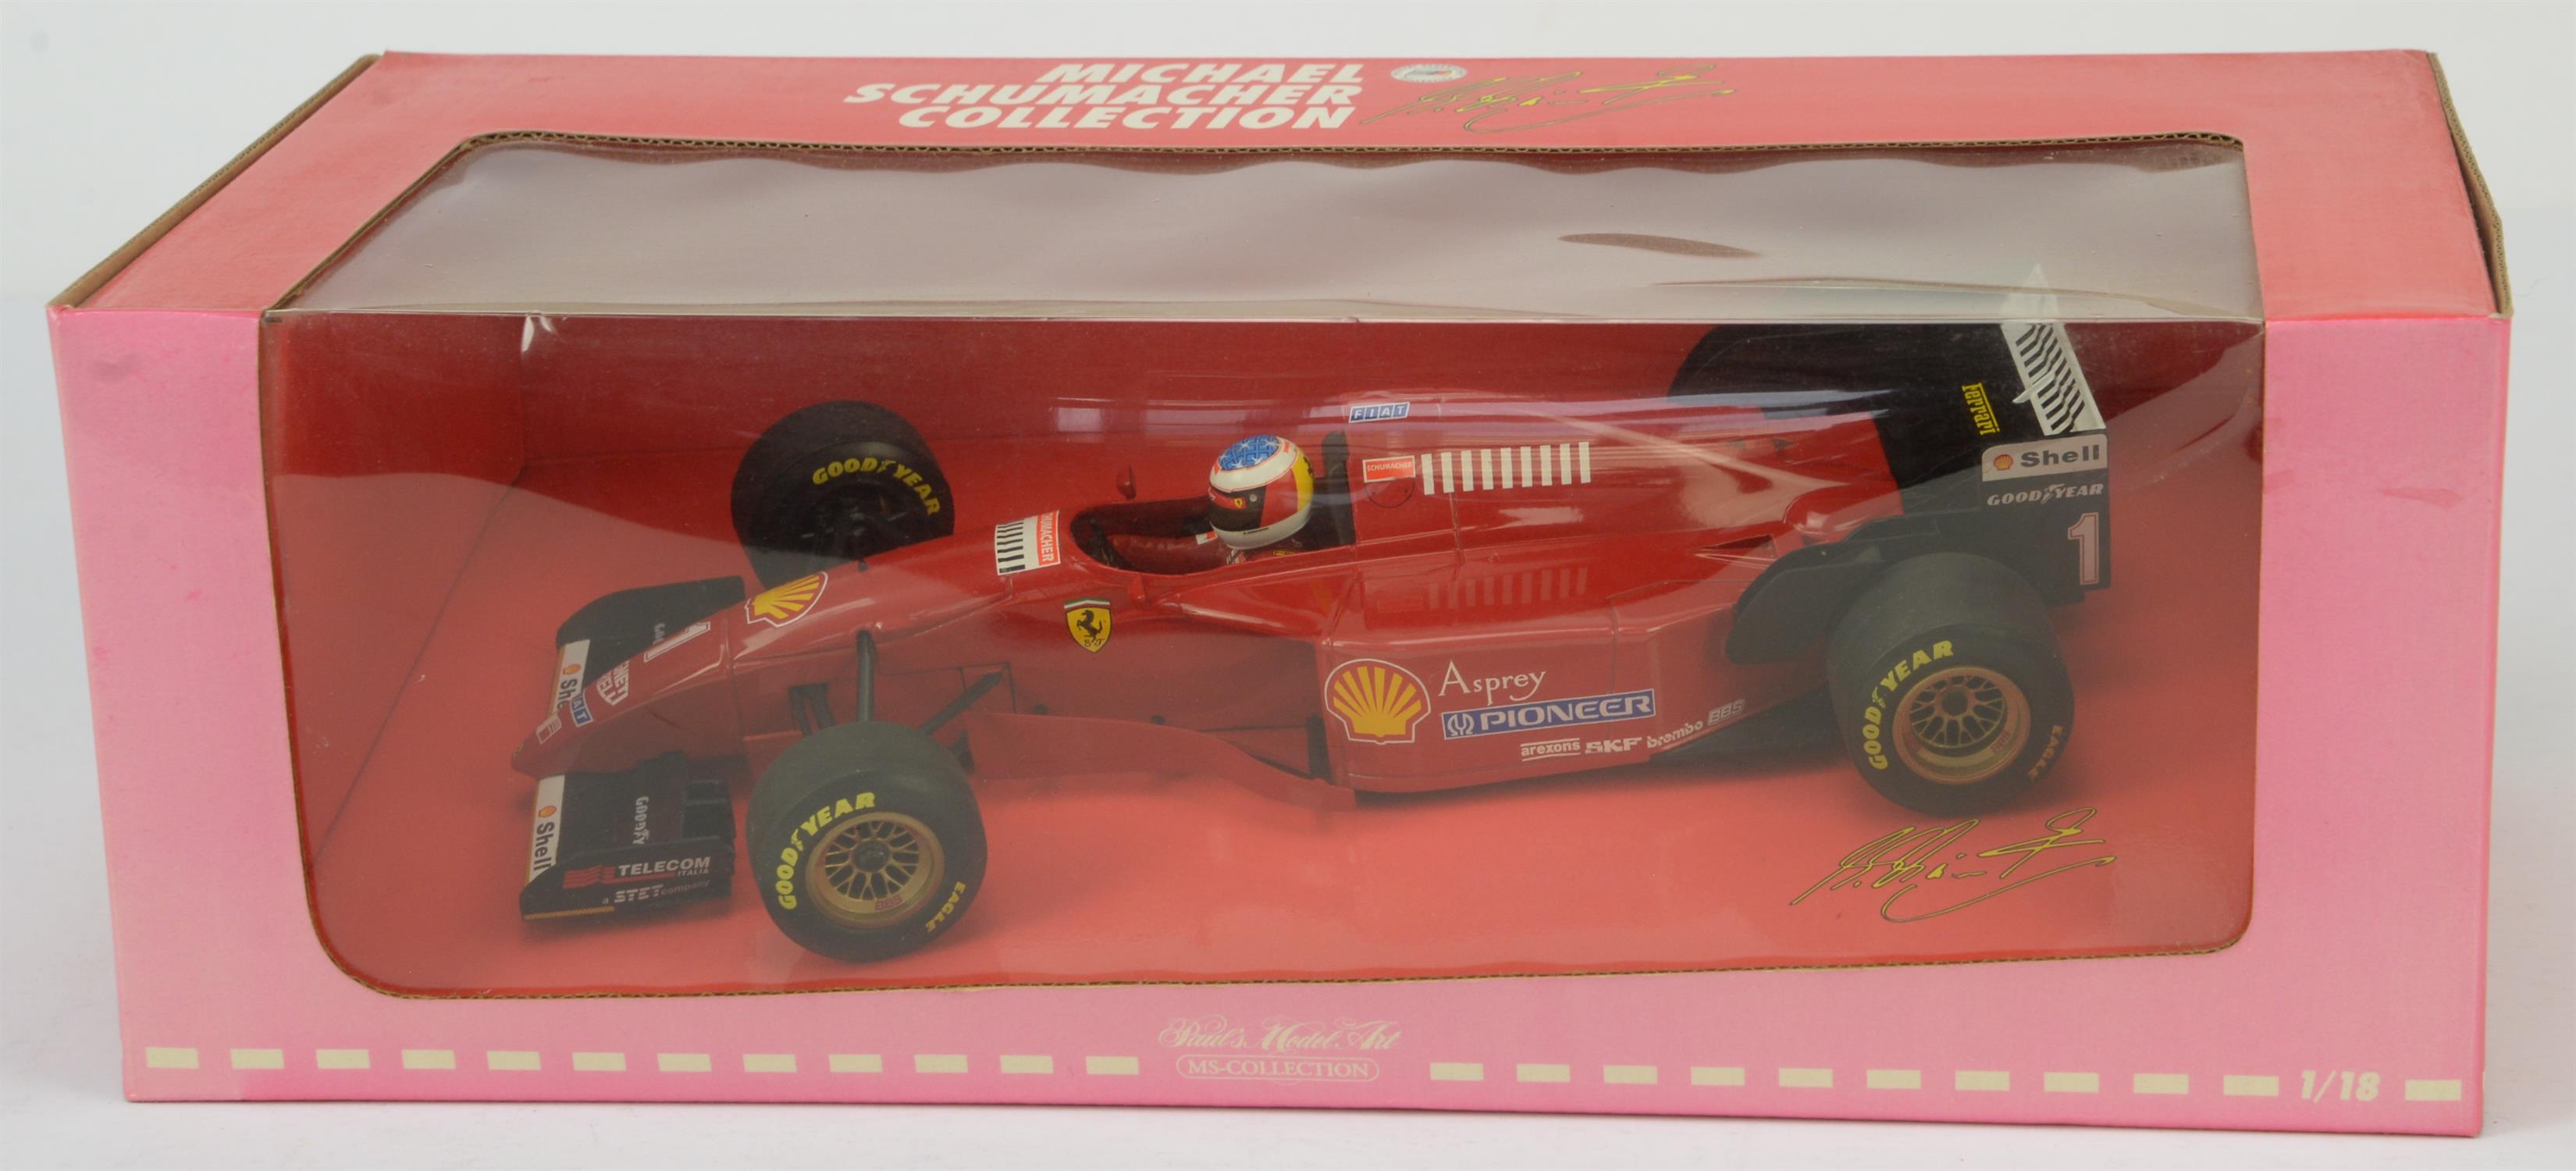 Hot Wheels Racing - Four Michael Schumacher collection, Boxed Mattel Ferrari 1:18 scale models, - Image 5 of 5